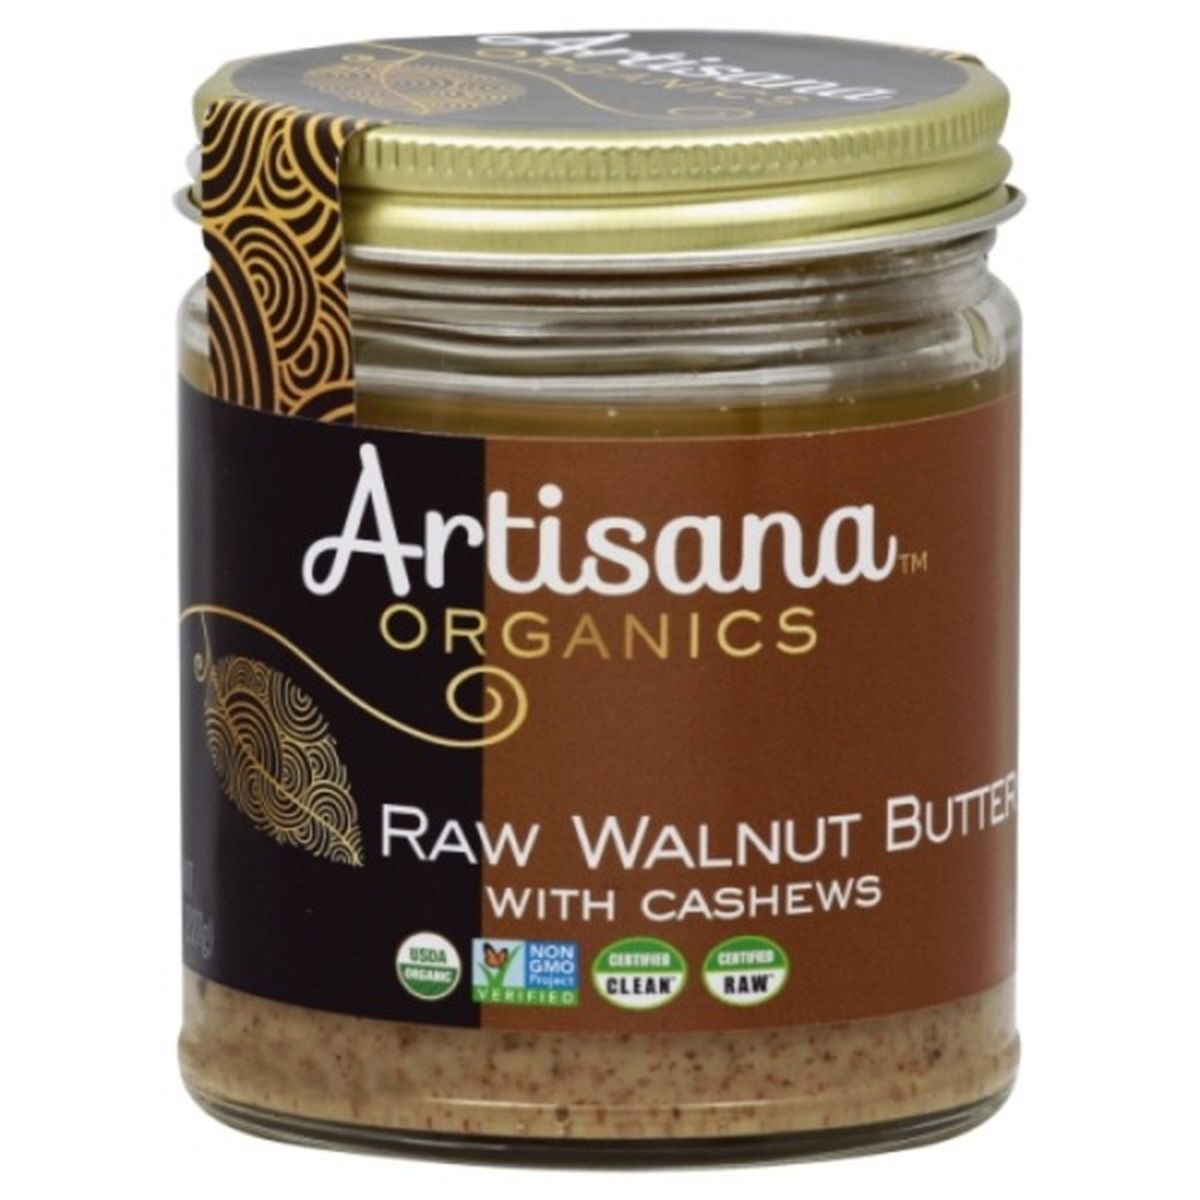 Calories in Artisana Organics Walnut Butter, Raw, Organic, with Cashews